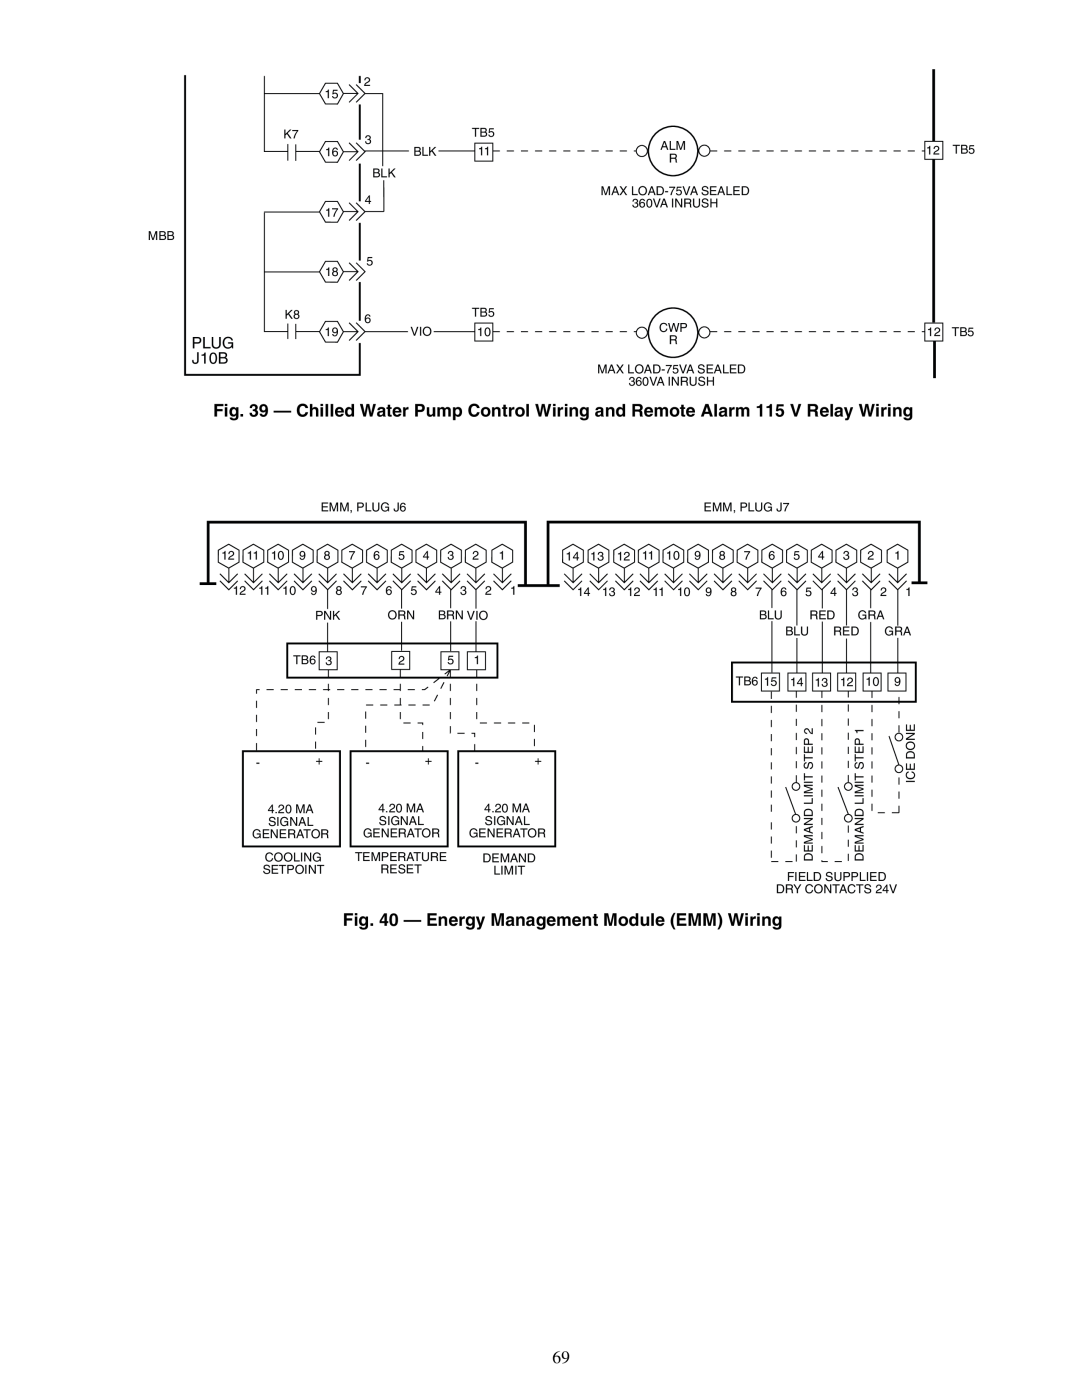 Carrier Air Conditioner Energy Management Module EMM Wiring, Plug, J10B, MAX LOAD-75VA SEALED, 360VA INRUSH, 12 TB5 12 TB5 